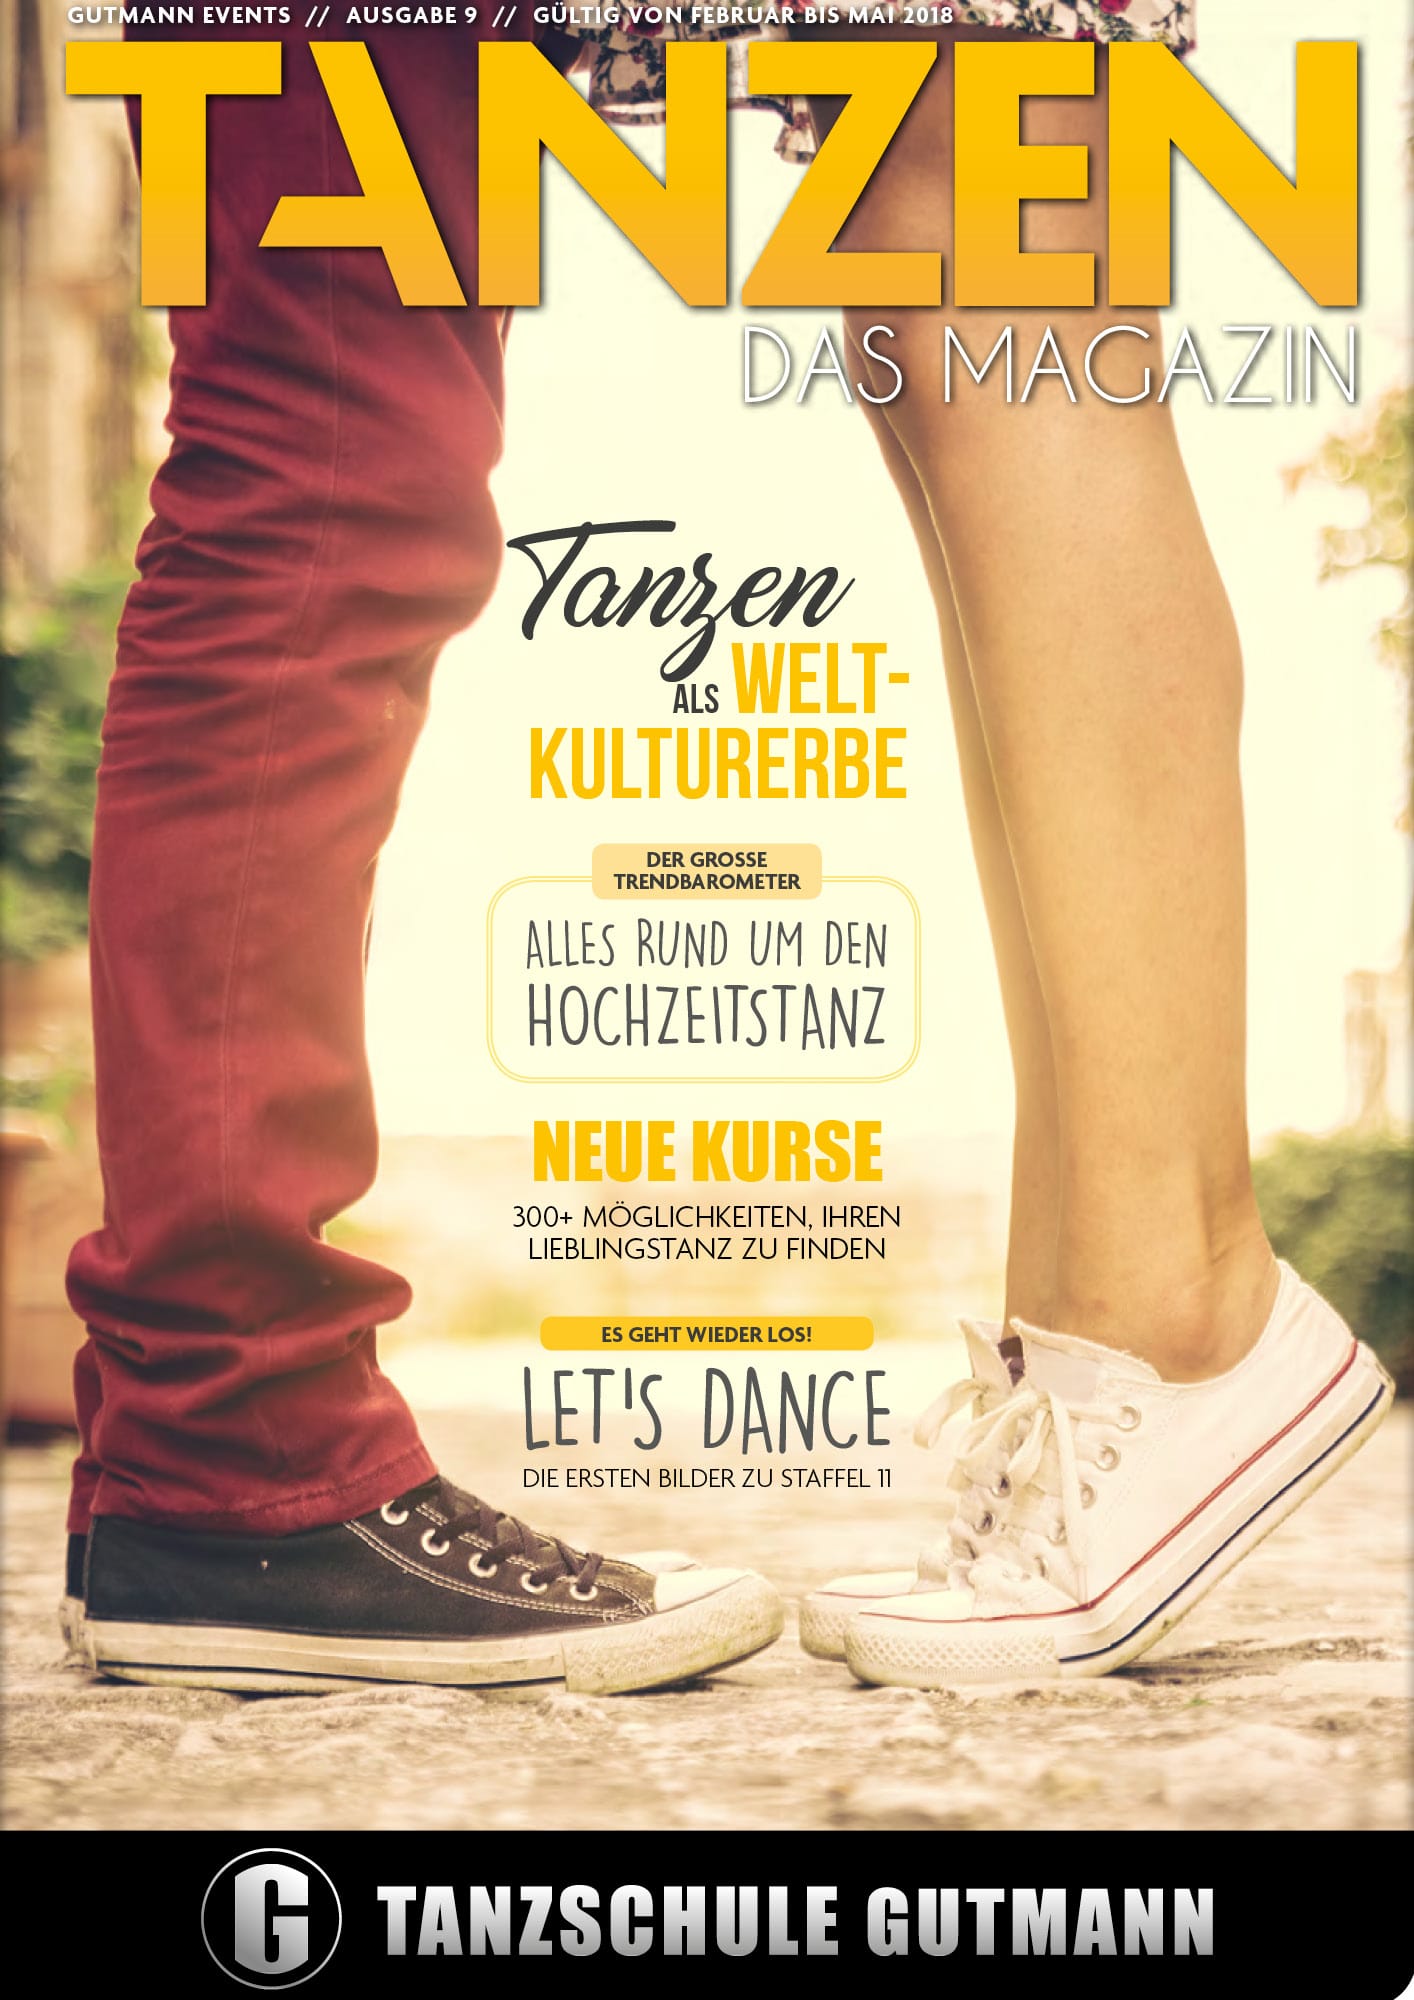 Tanzschule gutmann freiburg single